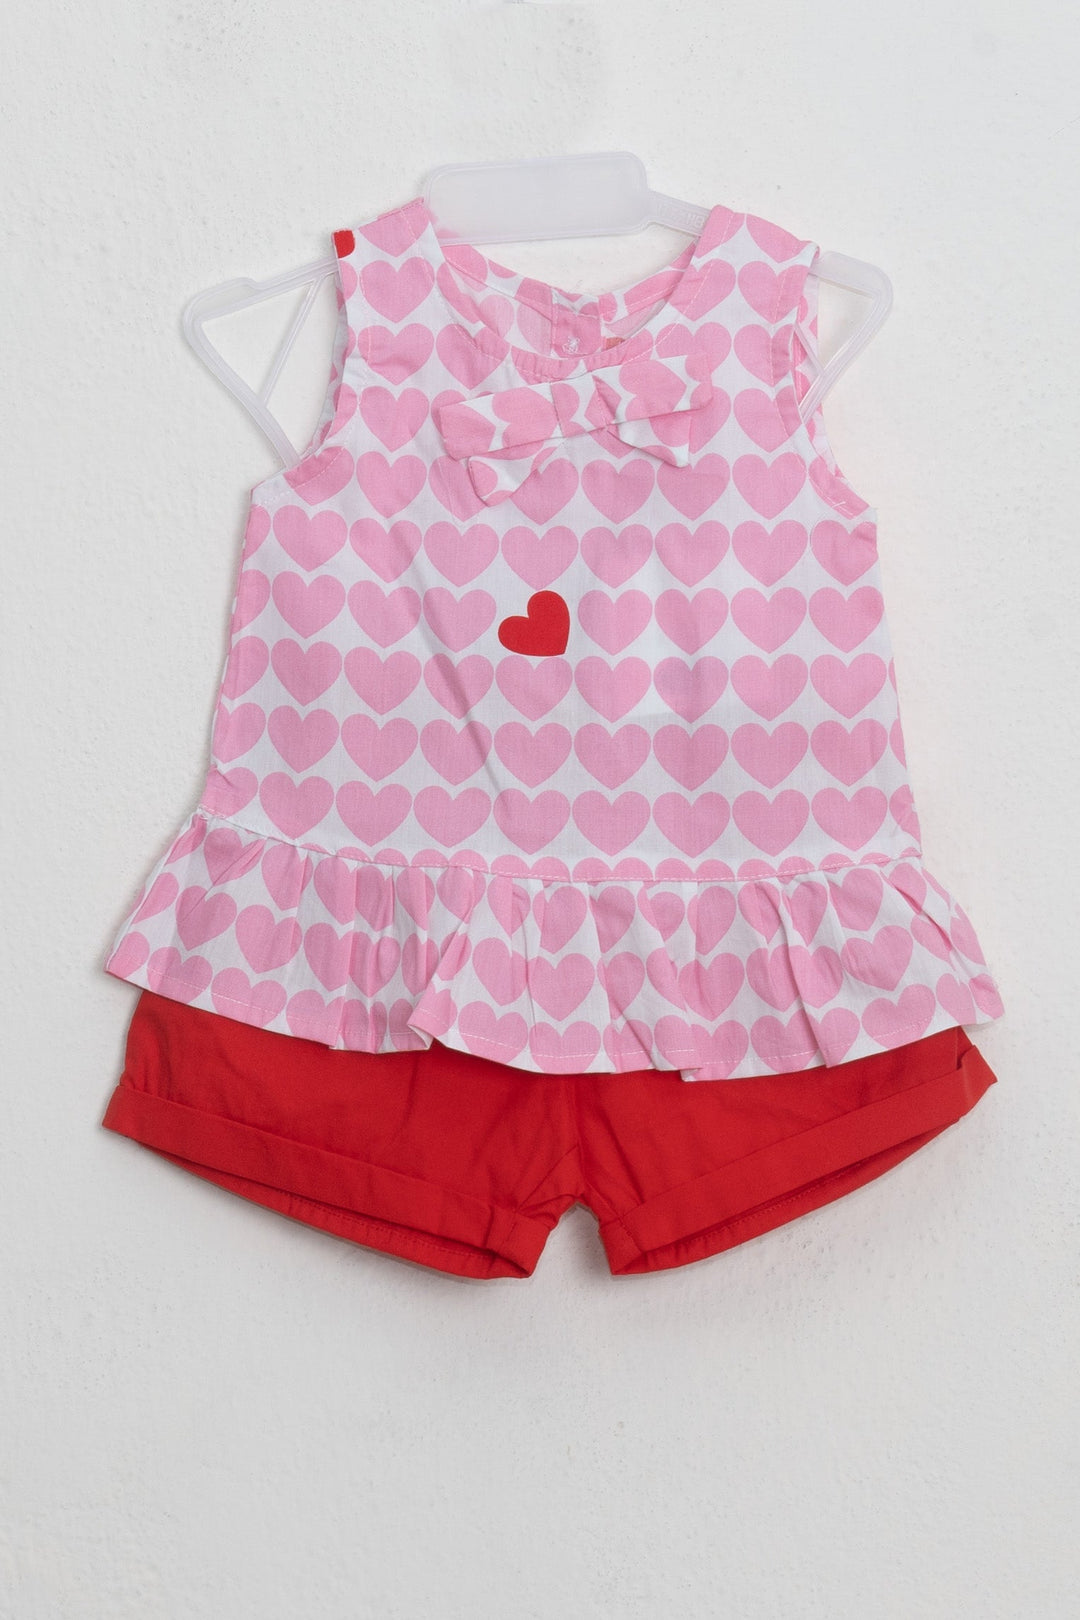 The Nesavu Baby Frock / Jhabla Stunning Pink Heartin Printed Sleeveless Top With Red Bottom For Baby Girls psr silks Nesavu 14 (1Y) / Pink BFJ383B